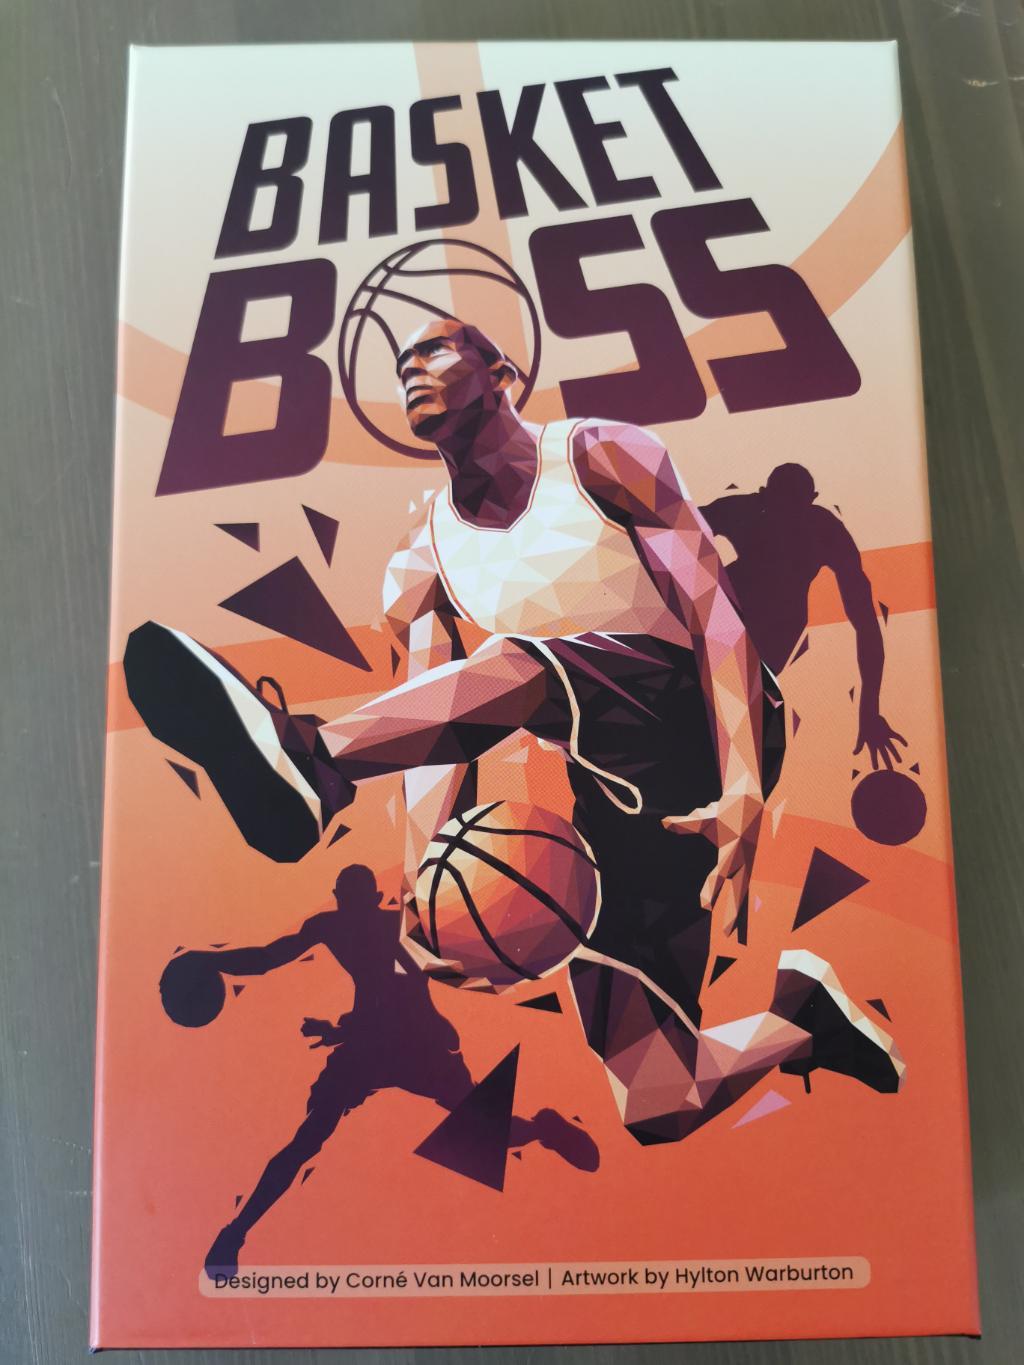 Basket Boss